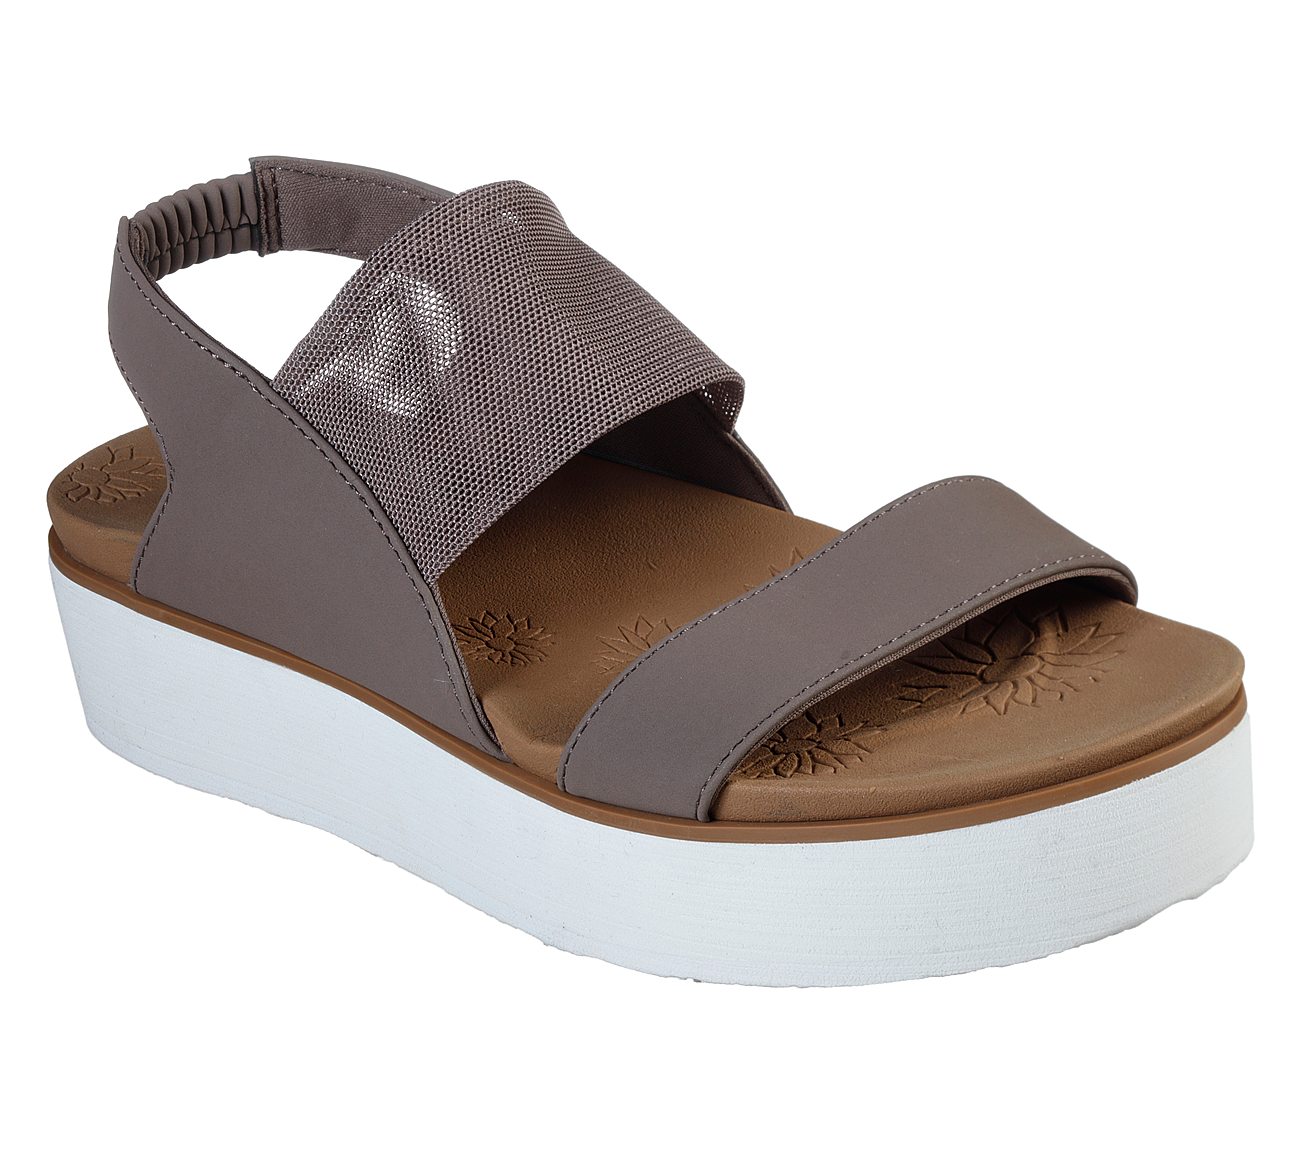 skechers summer sandals